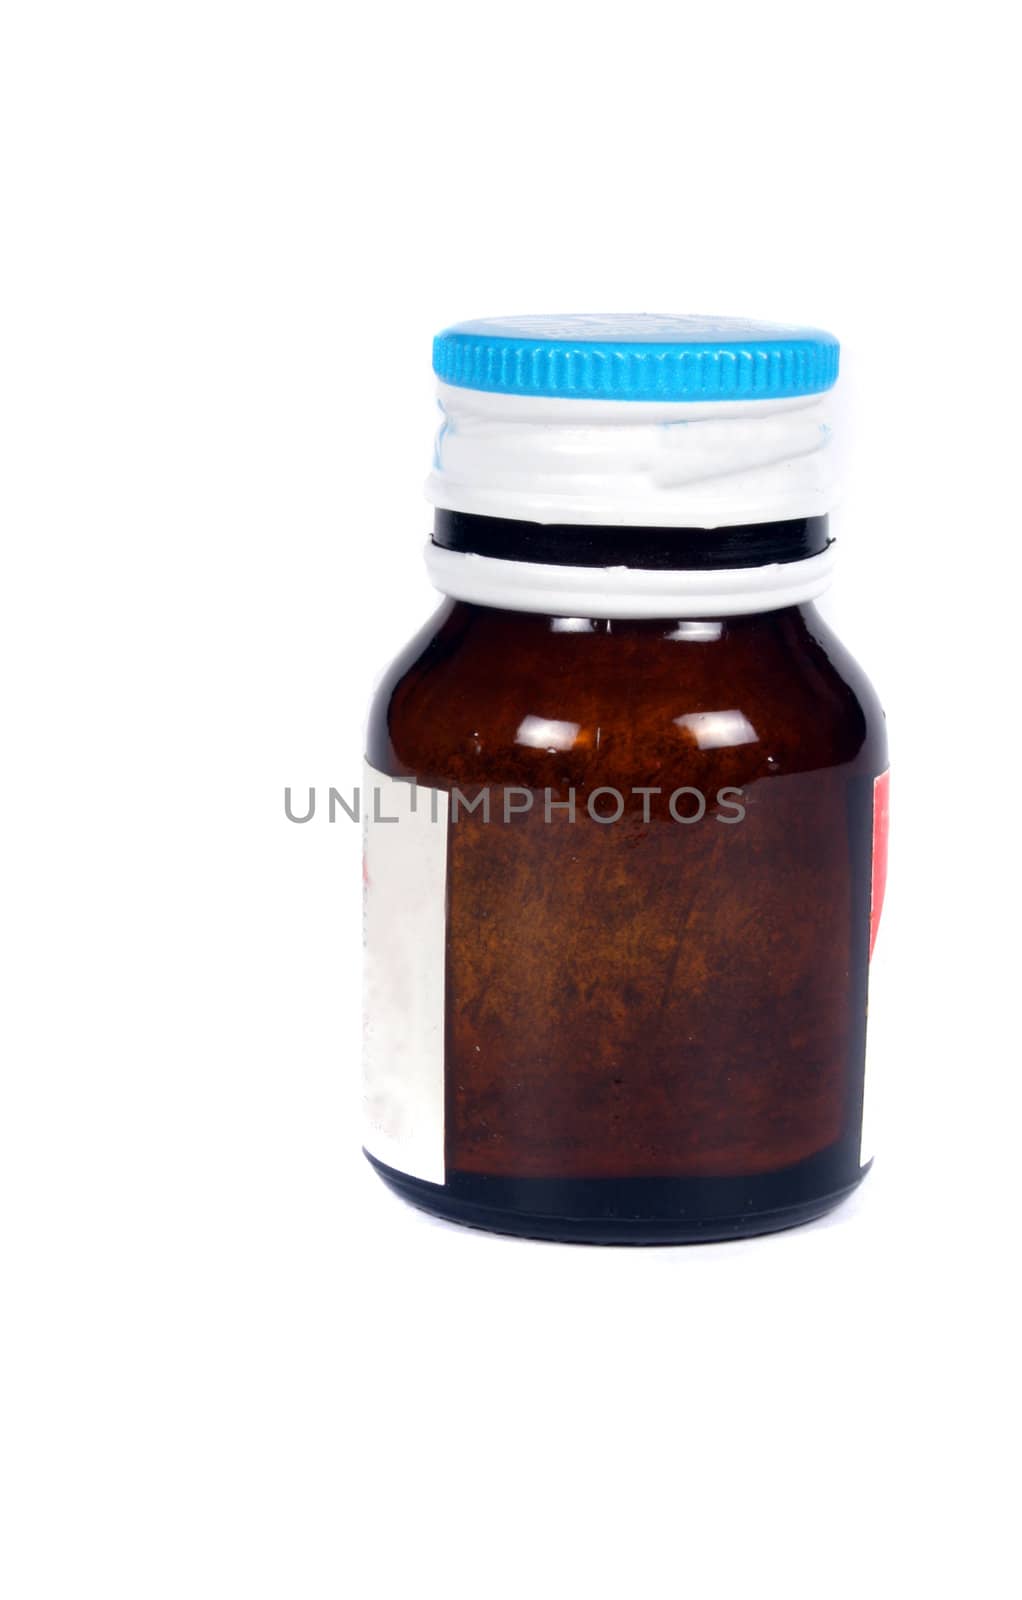 A medicine bottle, on white studio background.